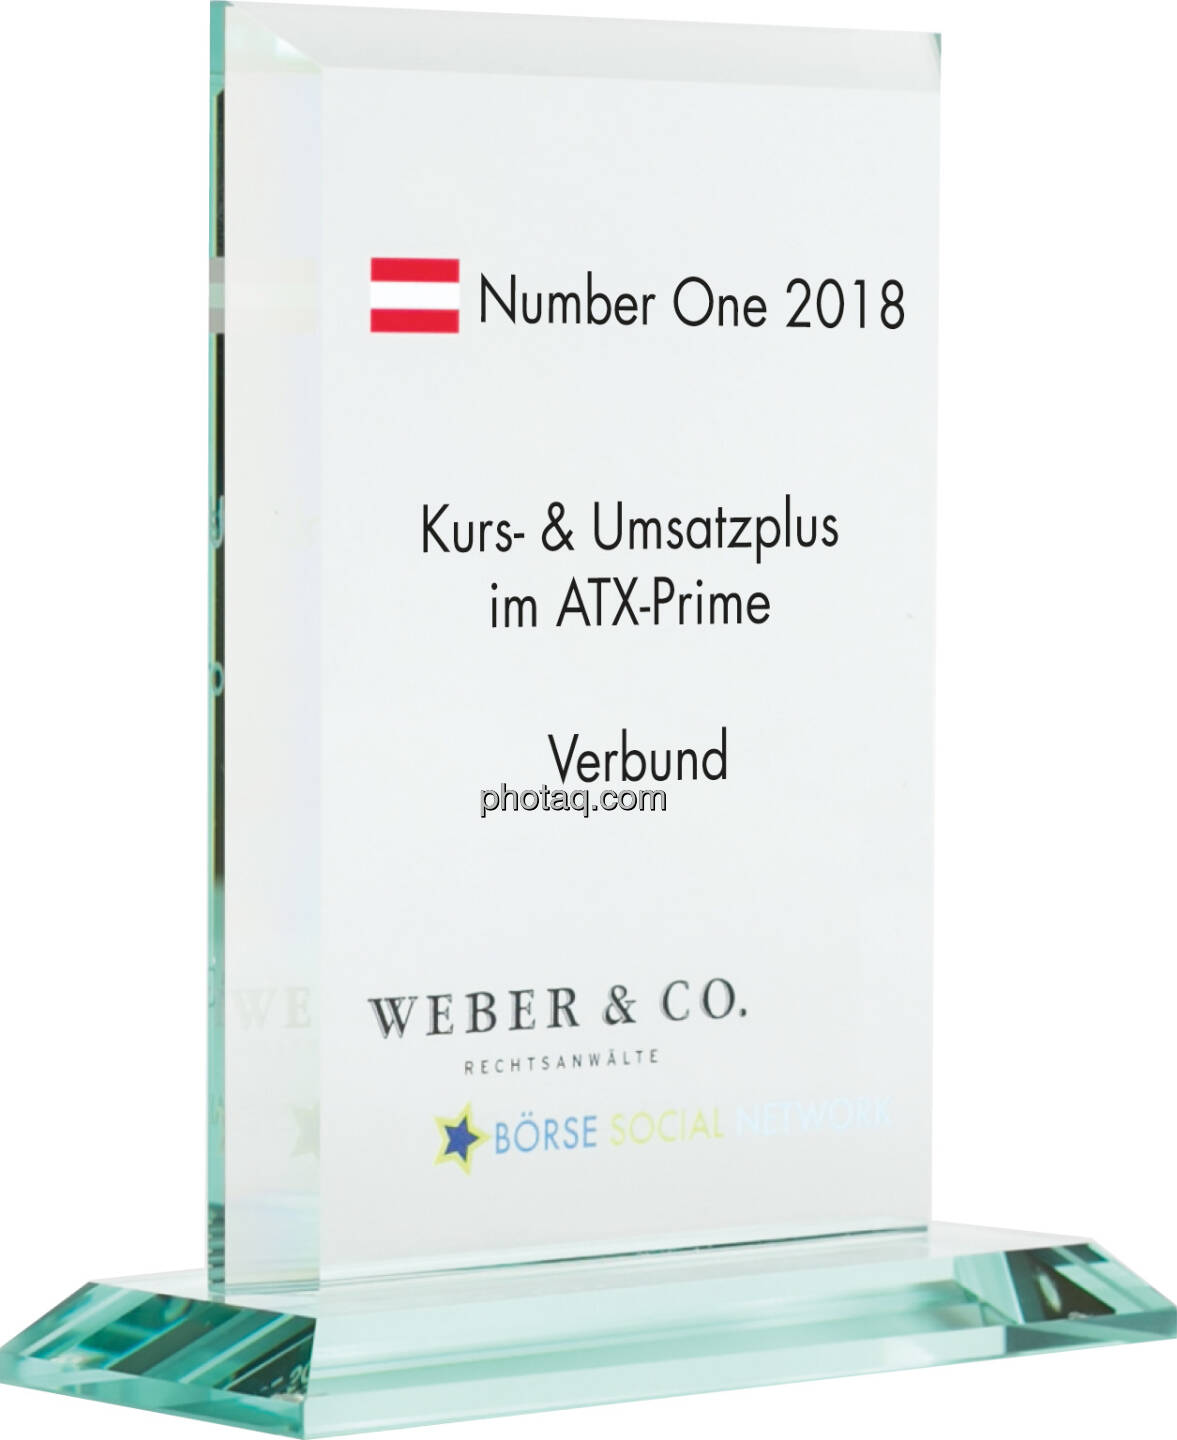 Number One Awards 2018 - Kurs- & Umsatzplus im ATX Prime Verbund